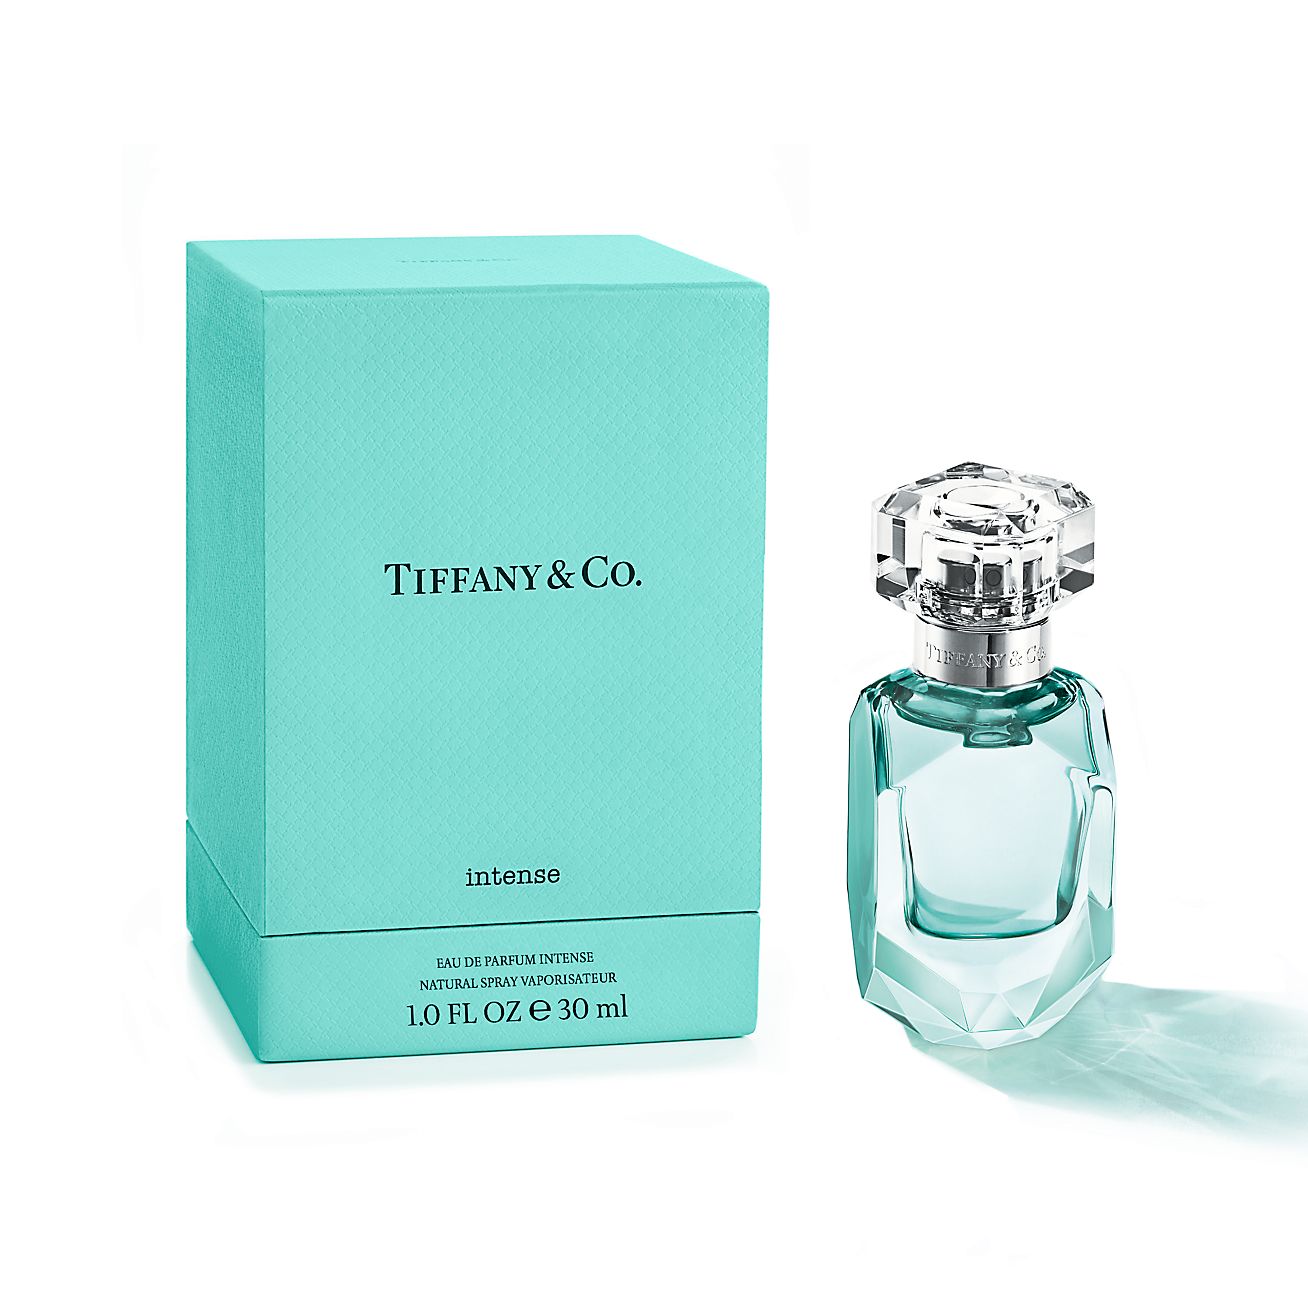 tiffany & co parfum intense